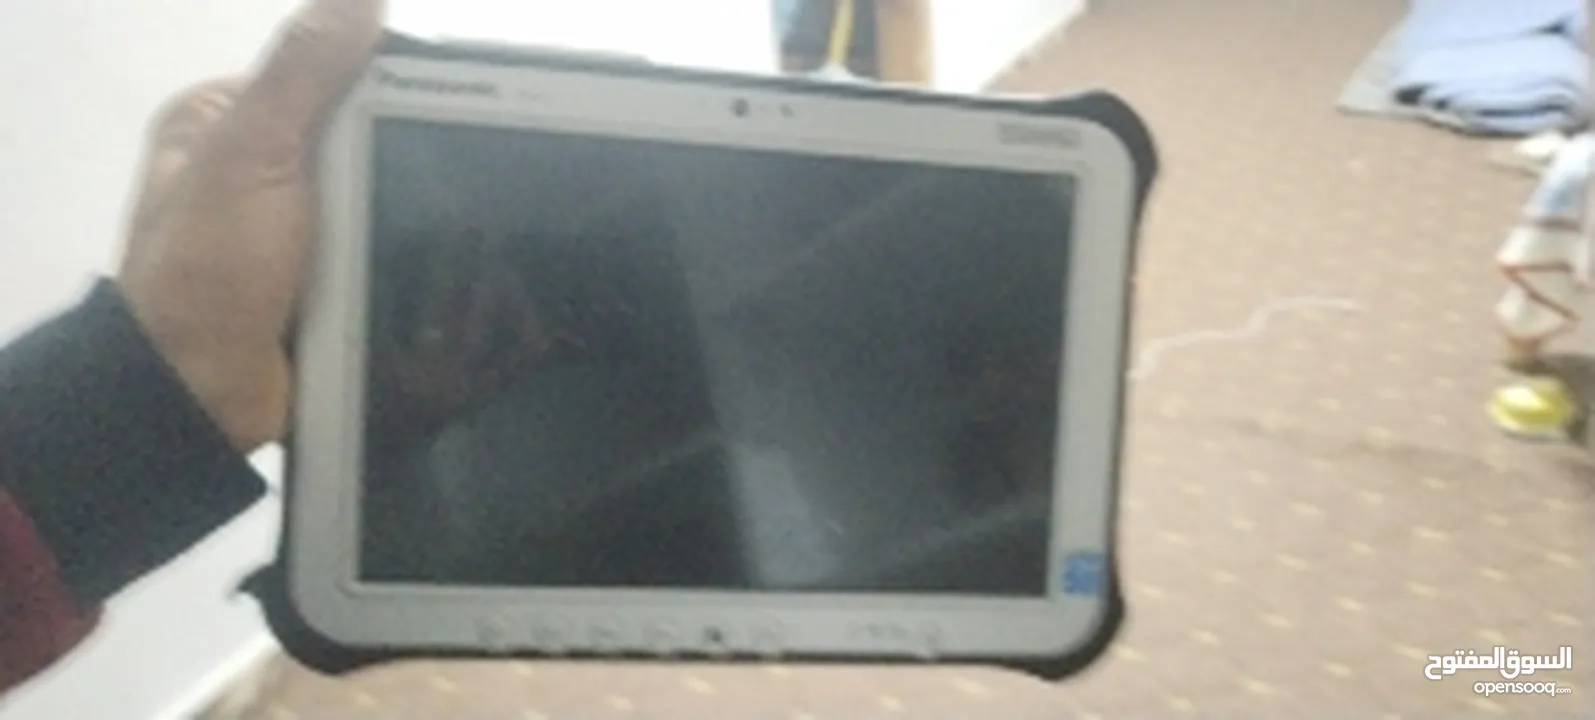 تابلت باناسونيك نظام ويندوز Panasonic tablet